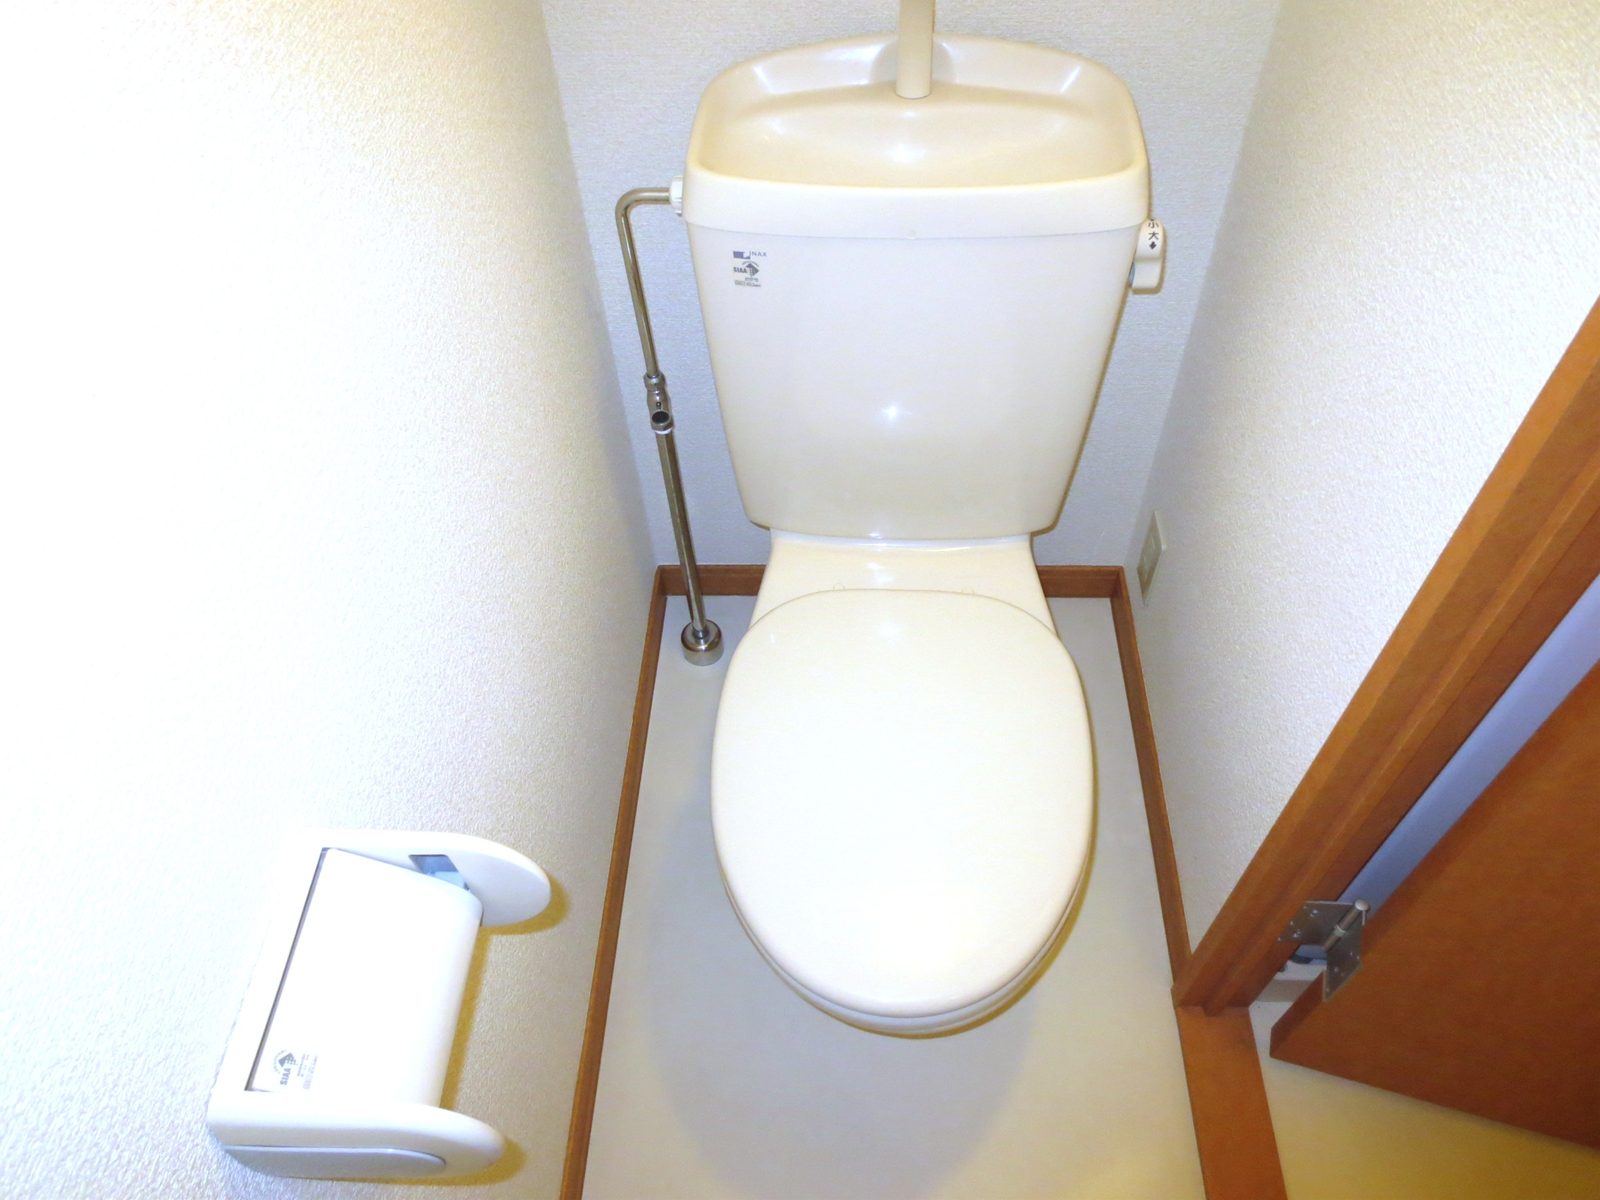 Toilet. I am glad separate toilet